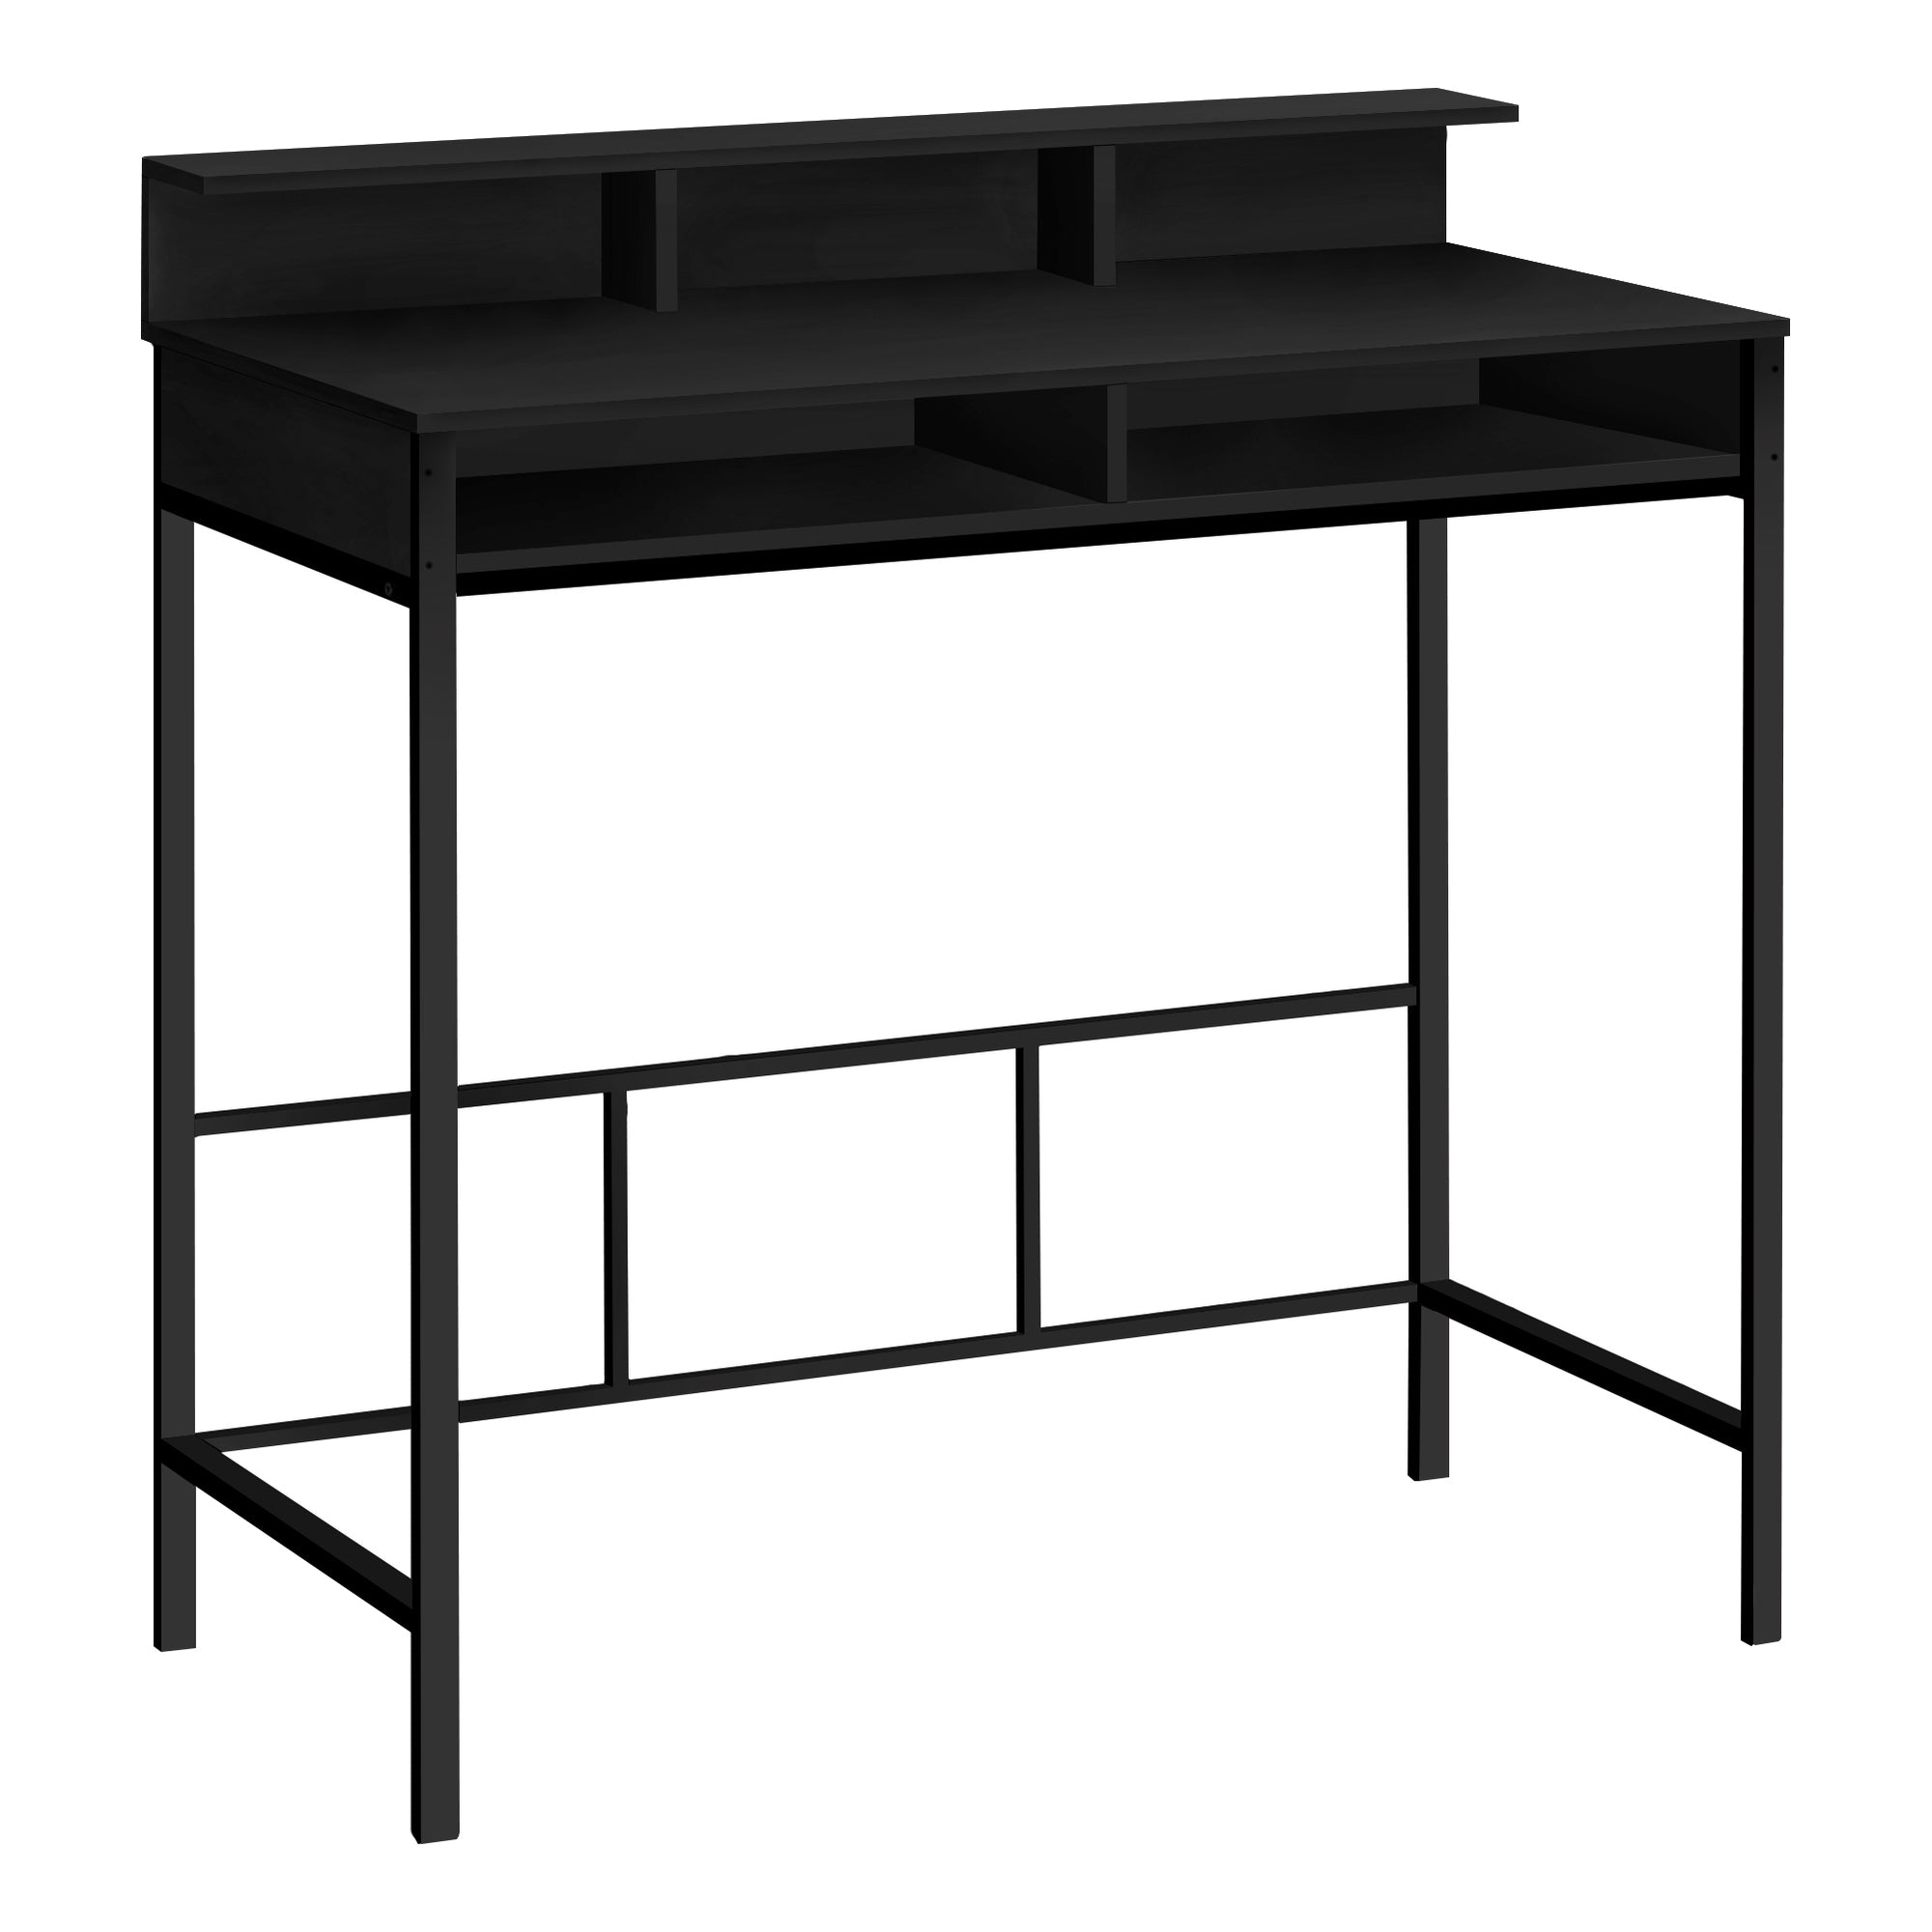 MN-837700    Computer Desk, Home Office, Standing, Storage Shelves, 48"L, Metal Legs, Laminate, Black, Contemporary, Industrial, Modern